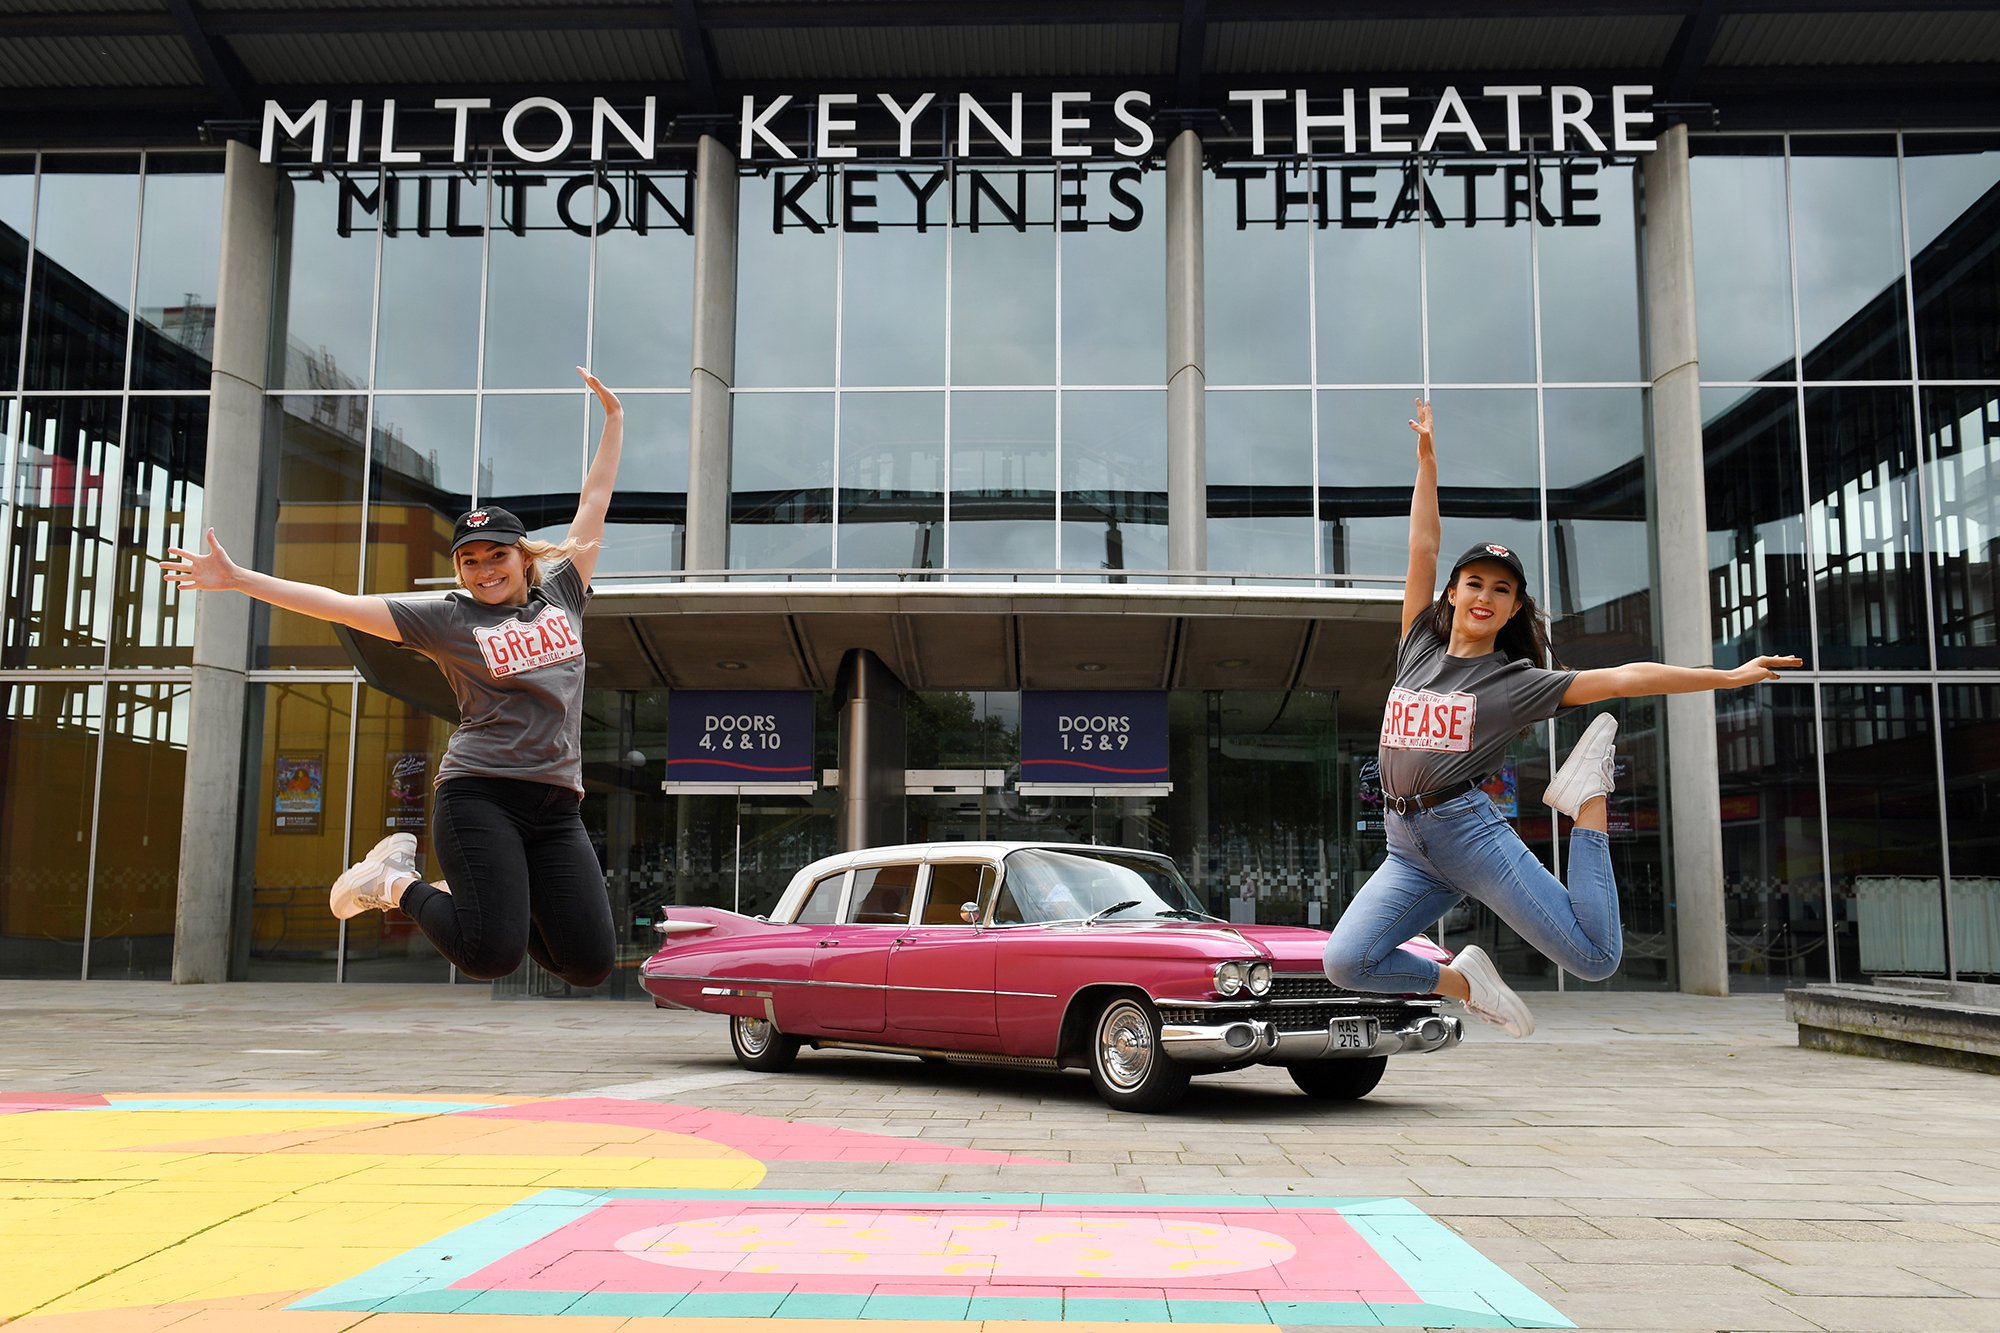 Grease arrives at Milton Keynes Theatre next week